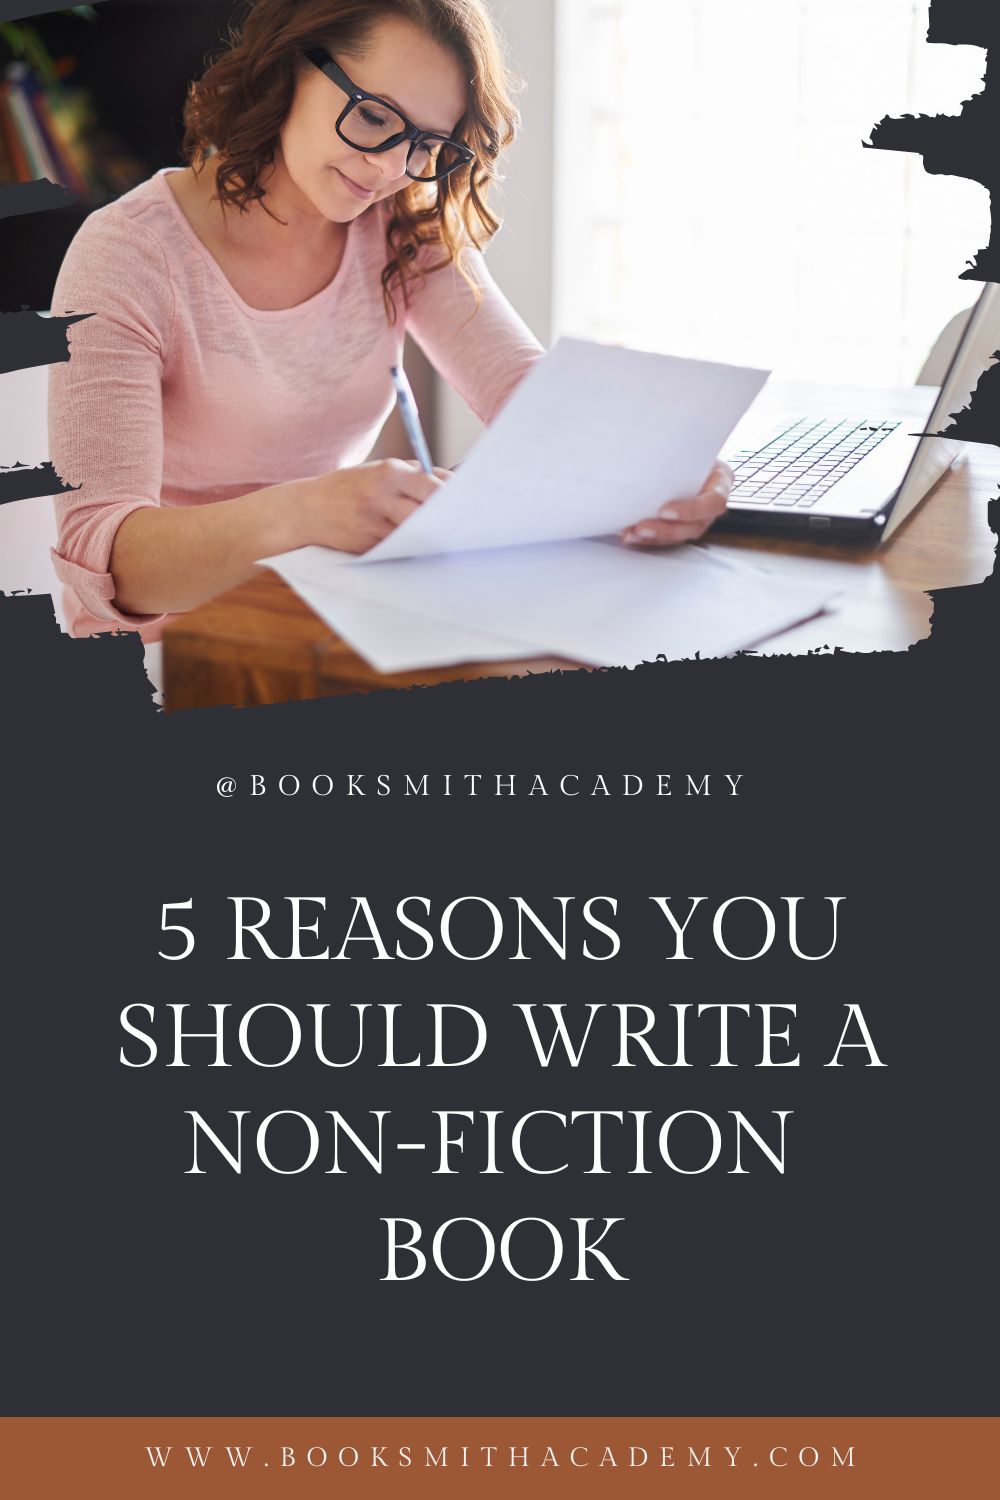 5 reasons you should write a non-fiction book